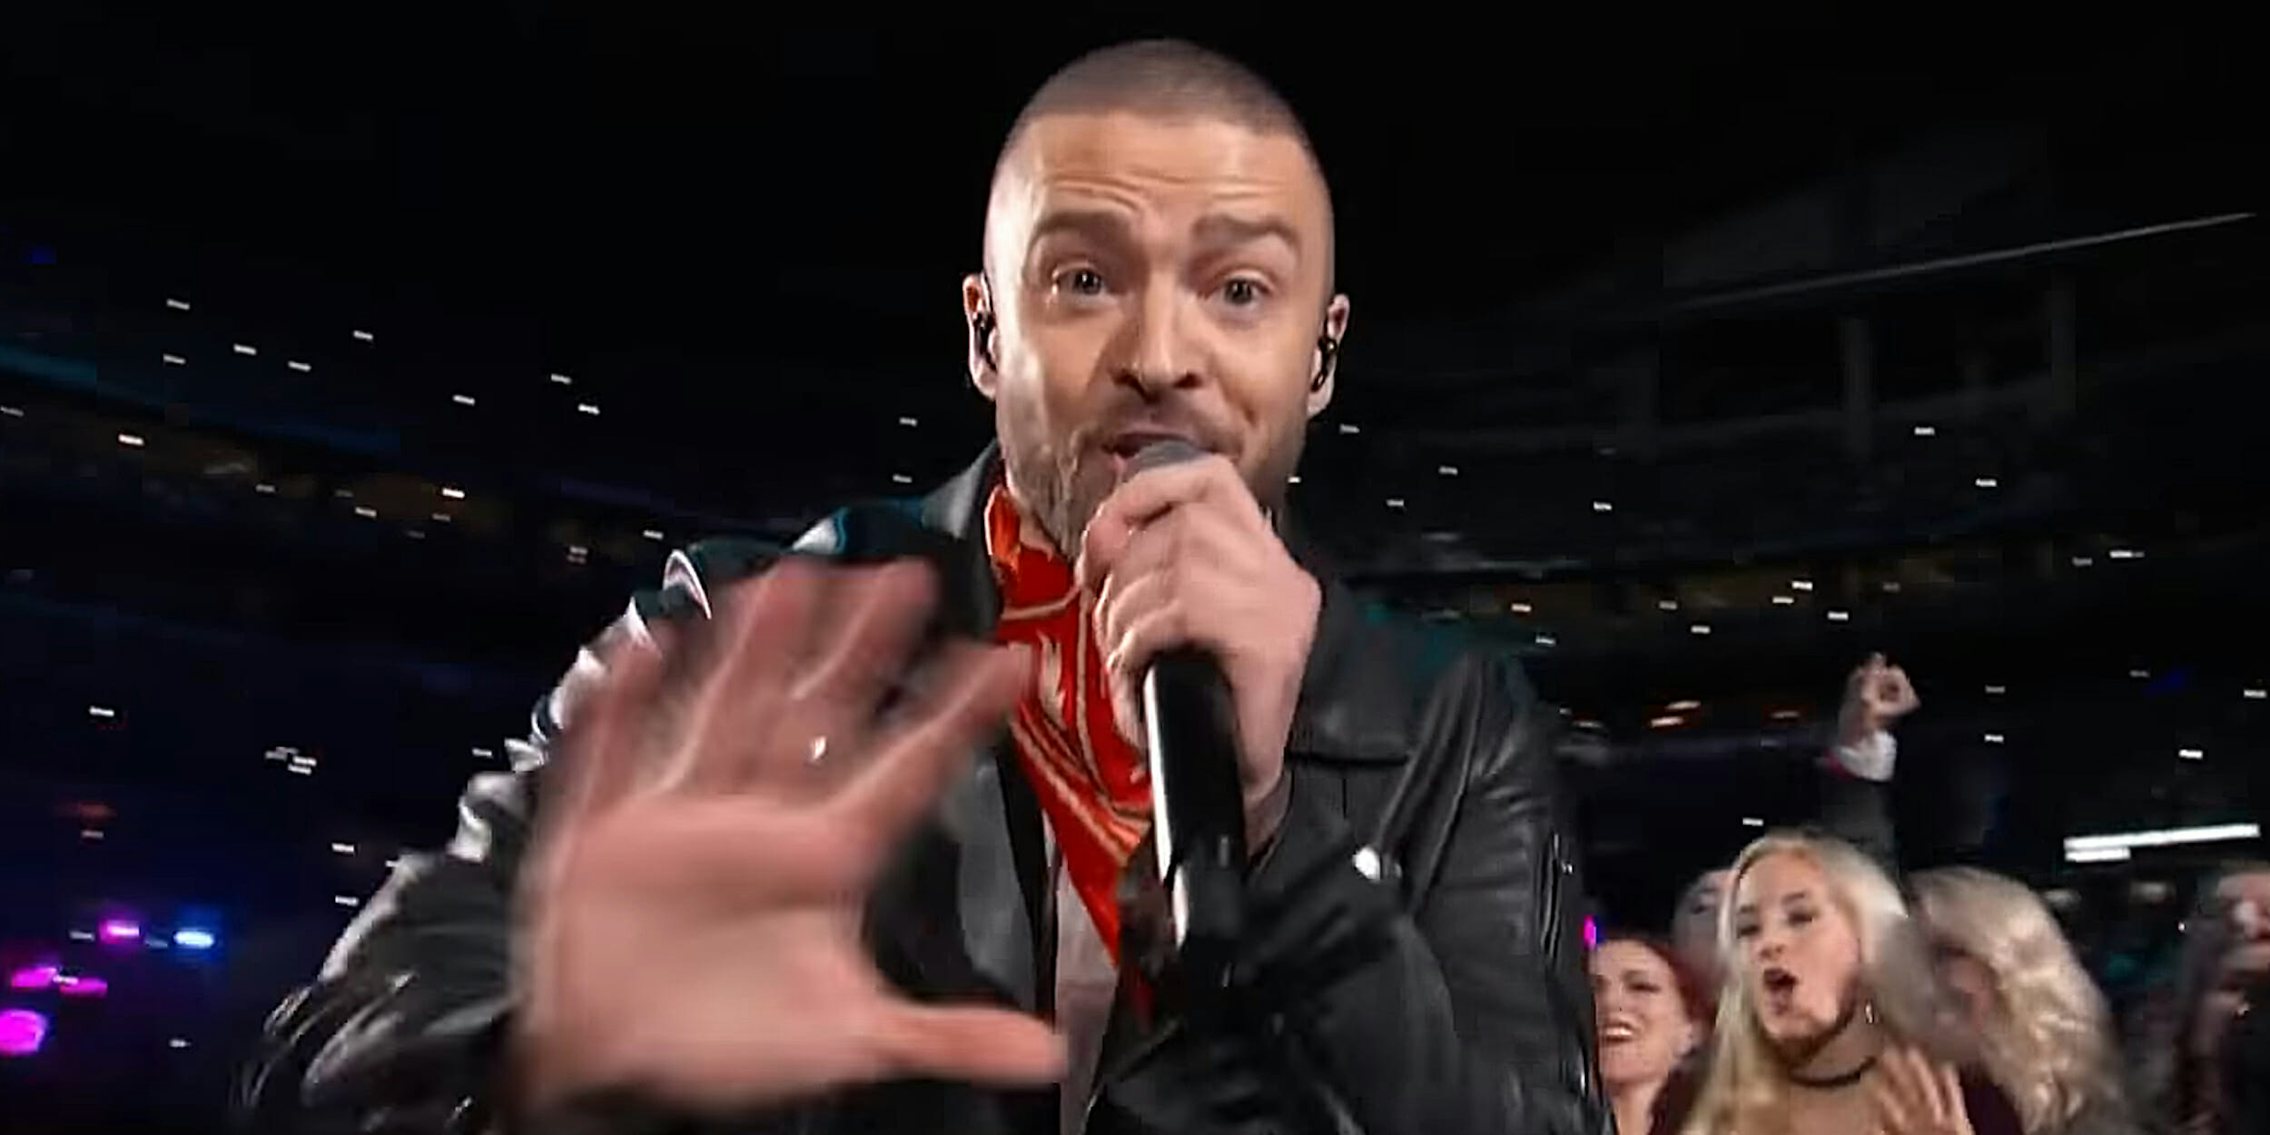 Justin Timberlake performing at Superbowl LII